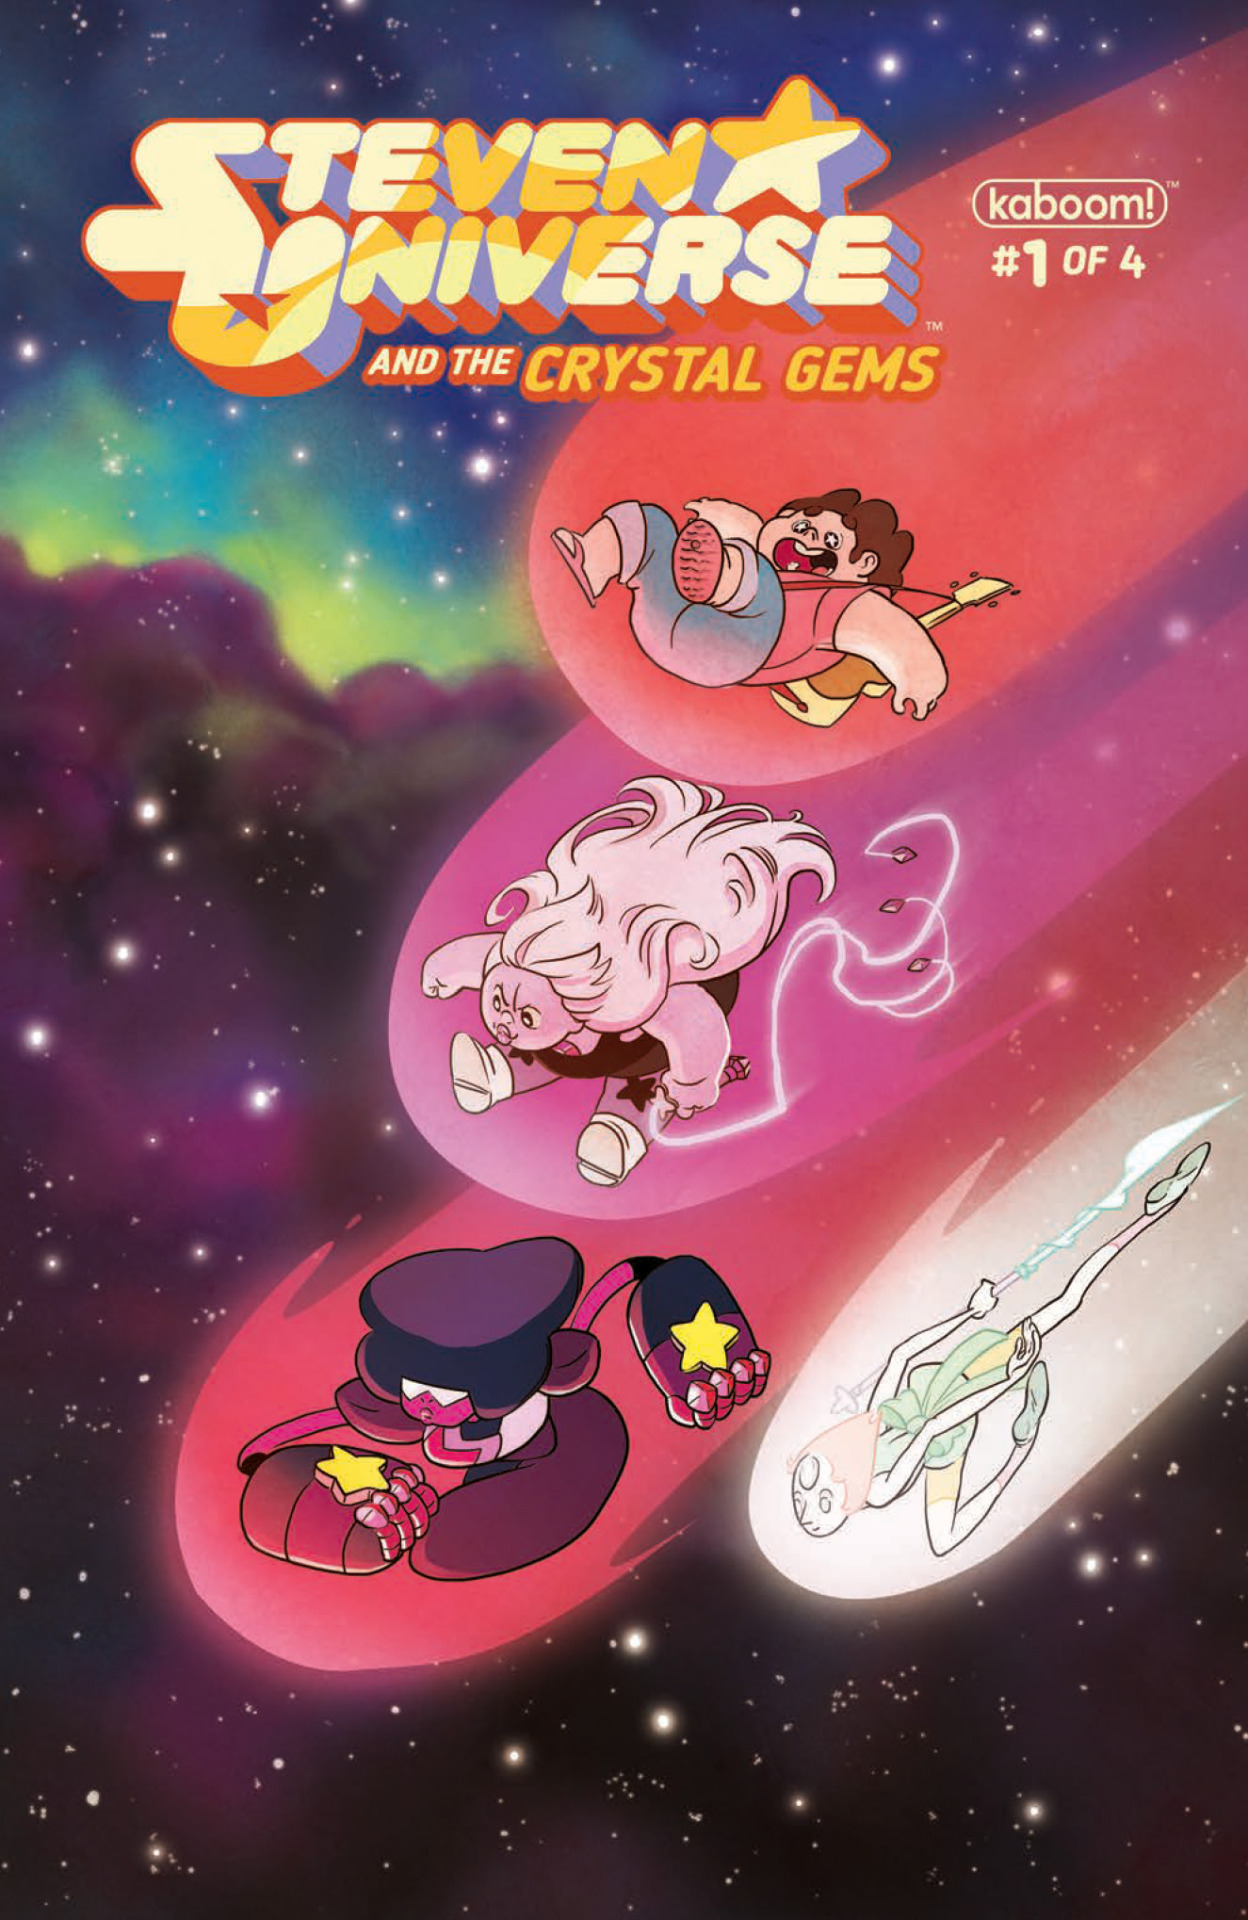 kaboomcomics:  NEW STEVEN UNIVERSE COMICS!!!!!!!! Ahem. Steven Universe and the Crystal